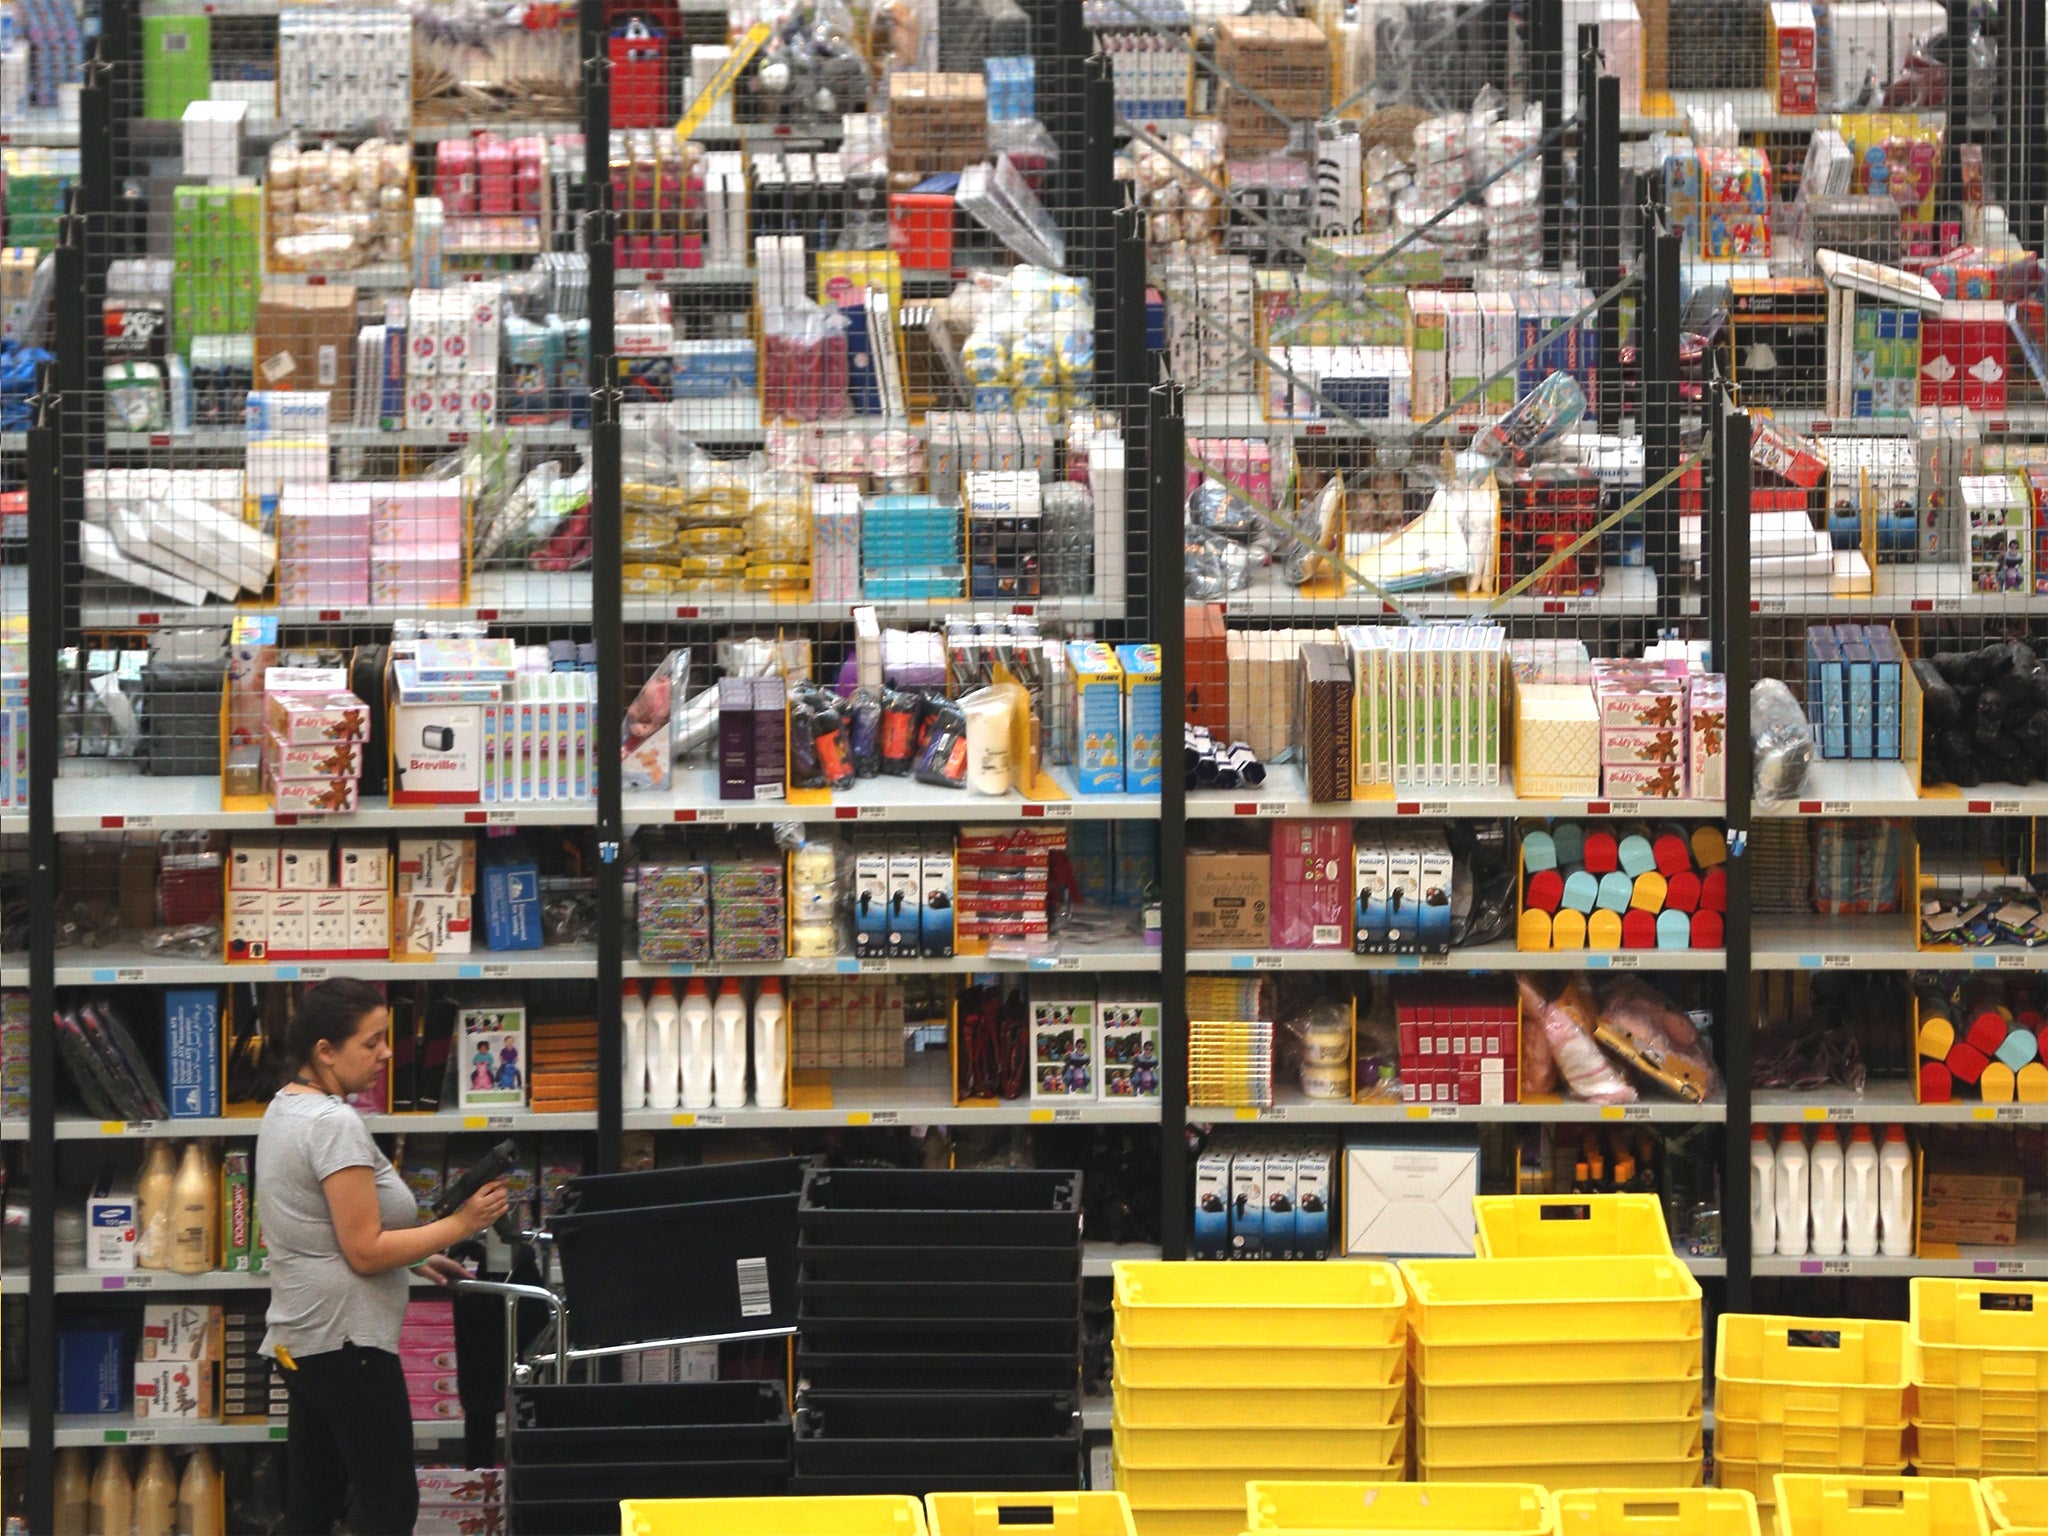 Shelf life: an Amazon warehouse in Peterborough